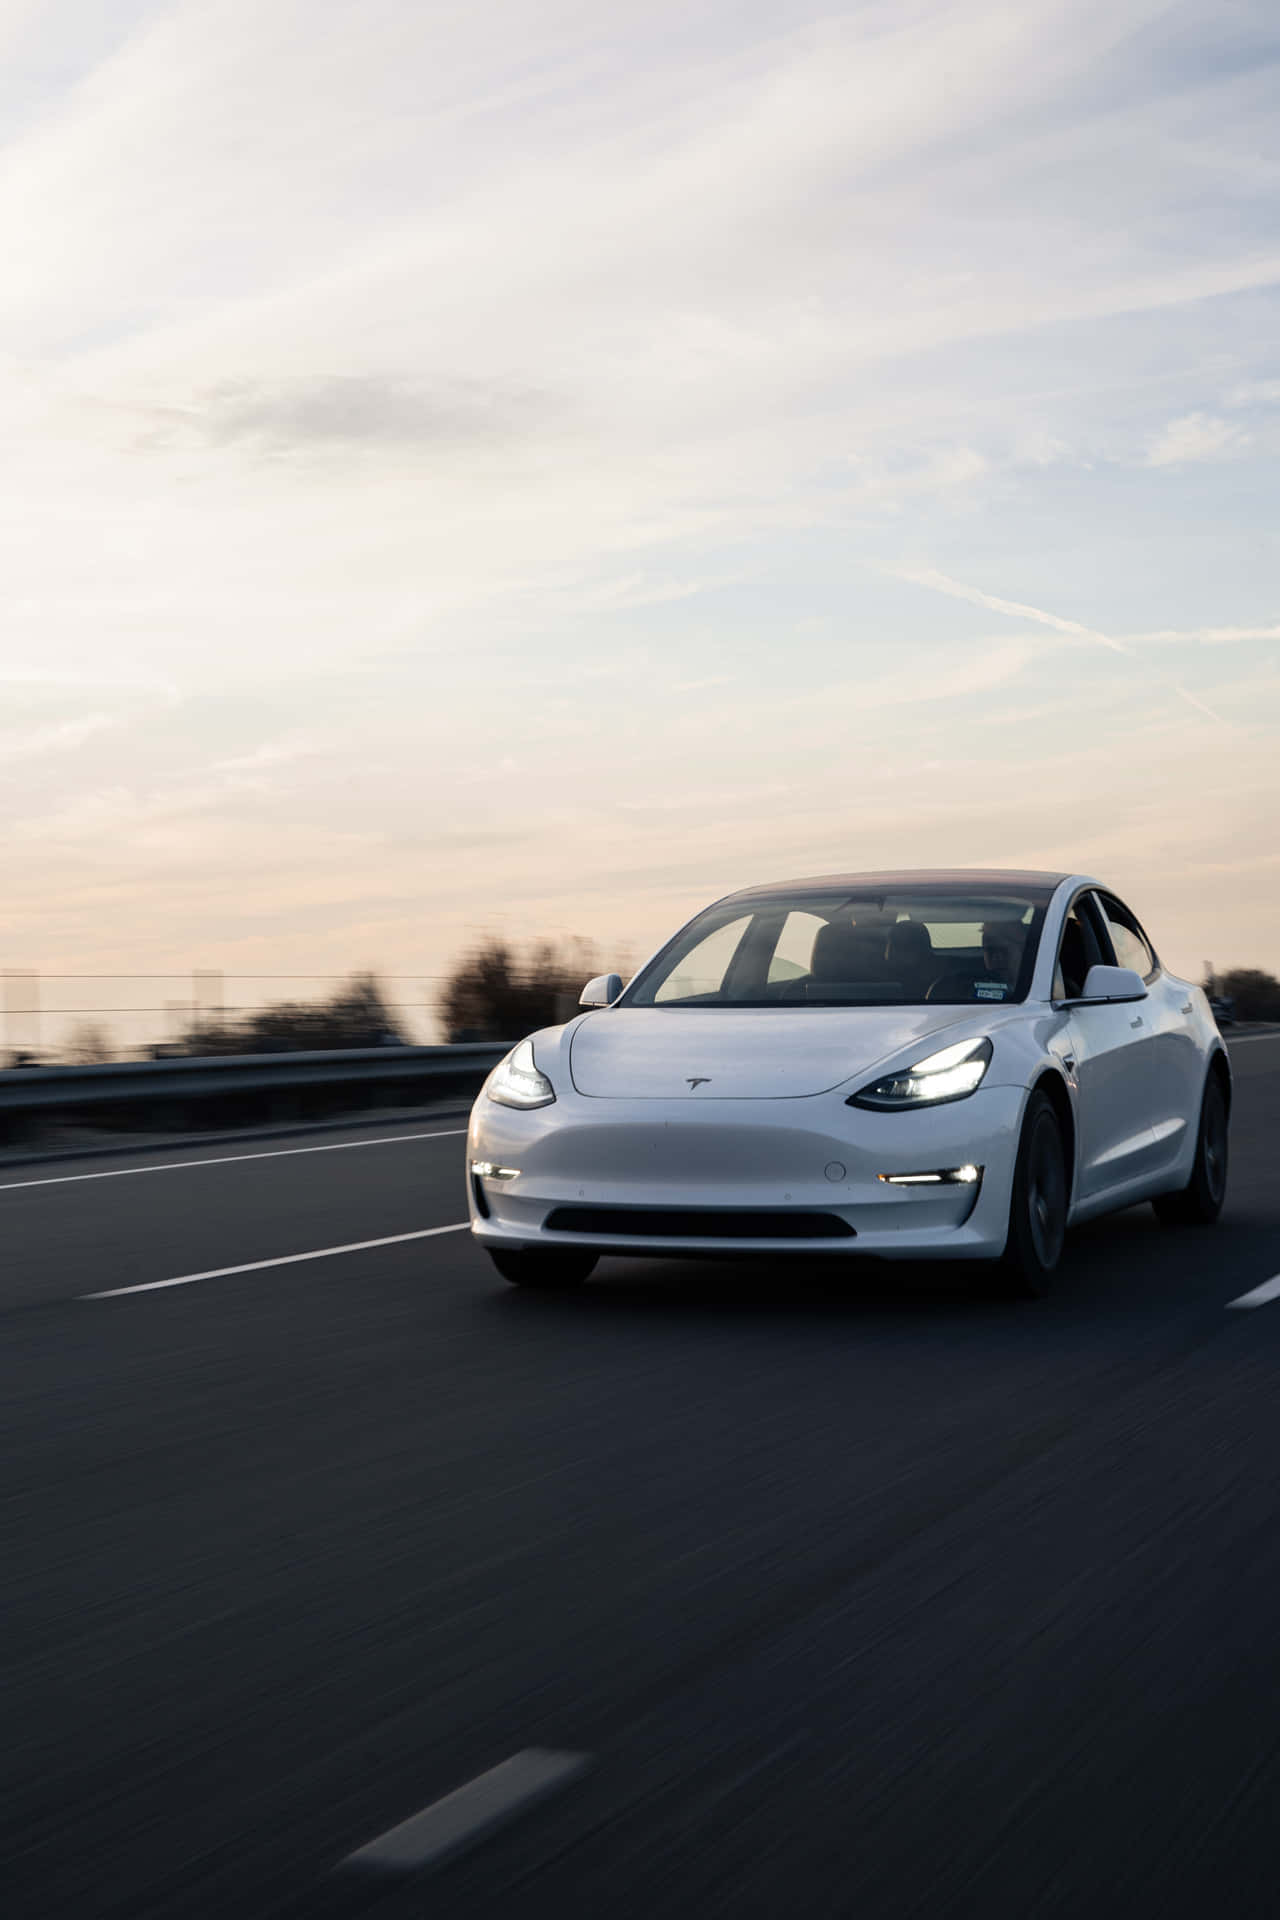 Teslamodel 3 Va A Tutta Velocità Avanti